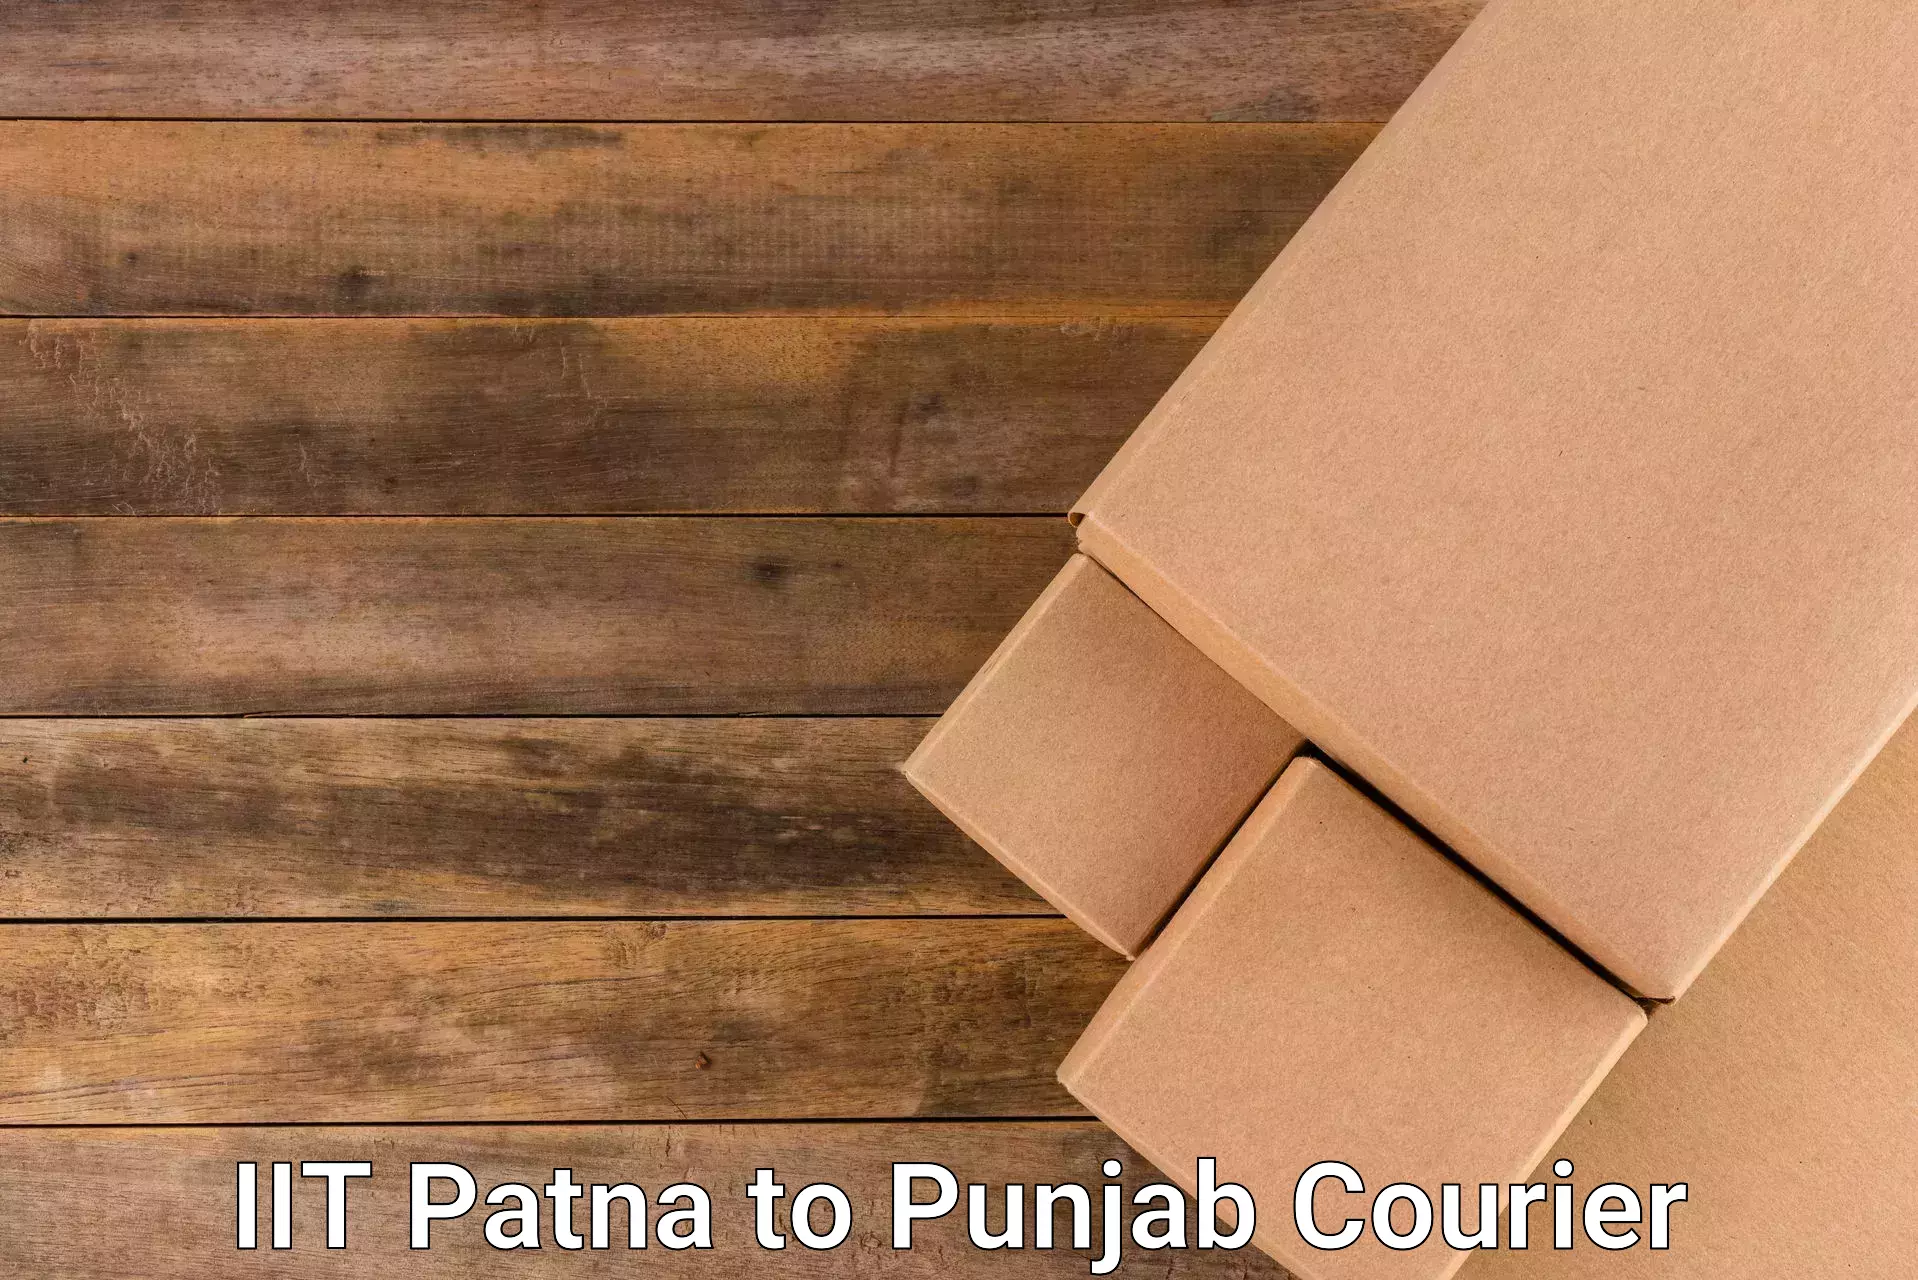 Digital courier platforms IIT Patna to Punjab